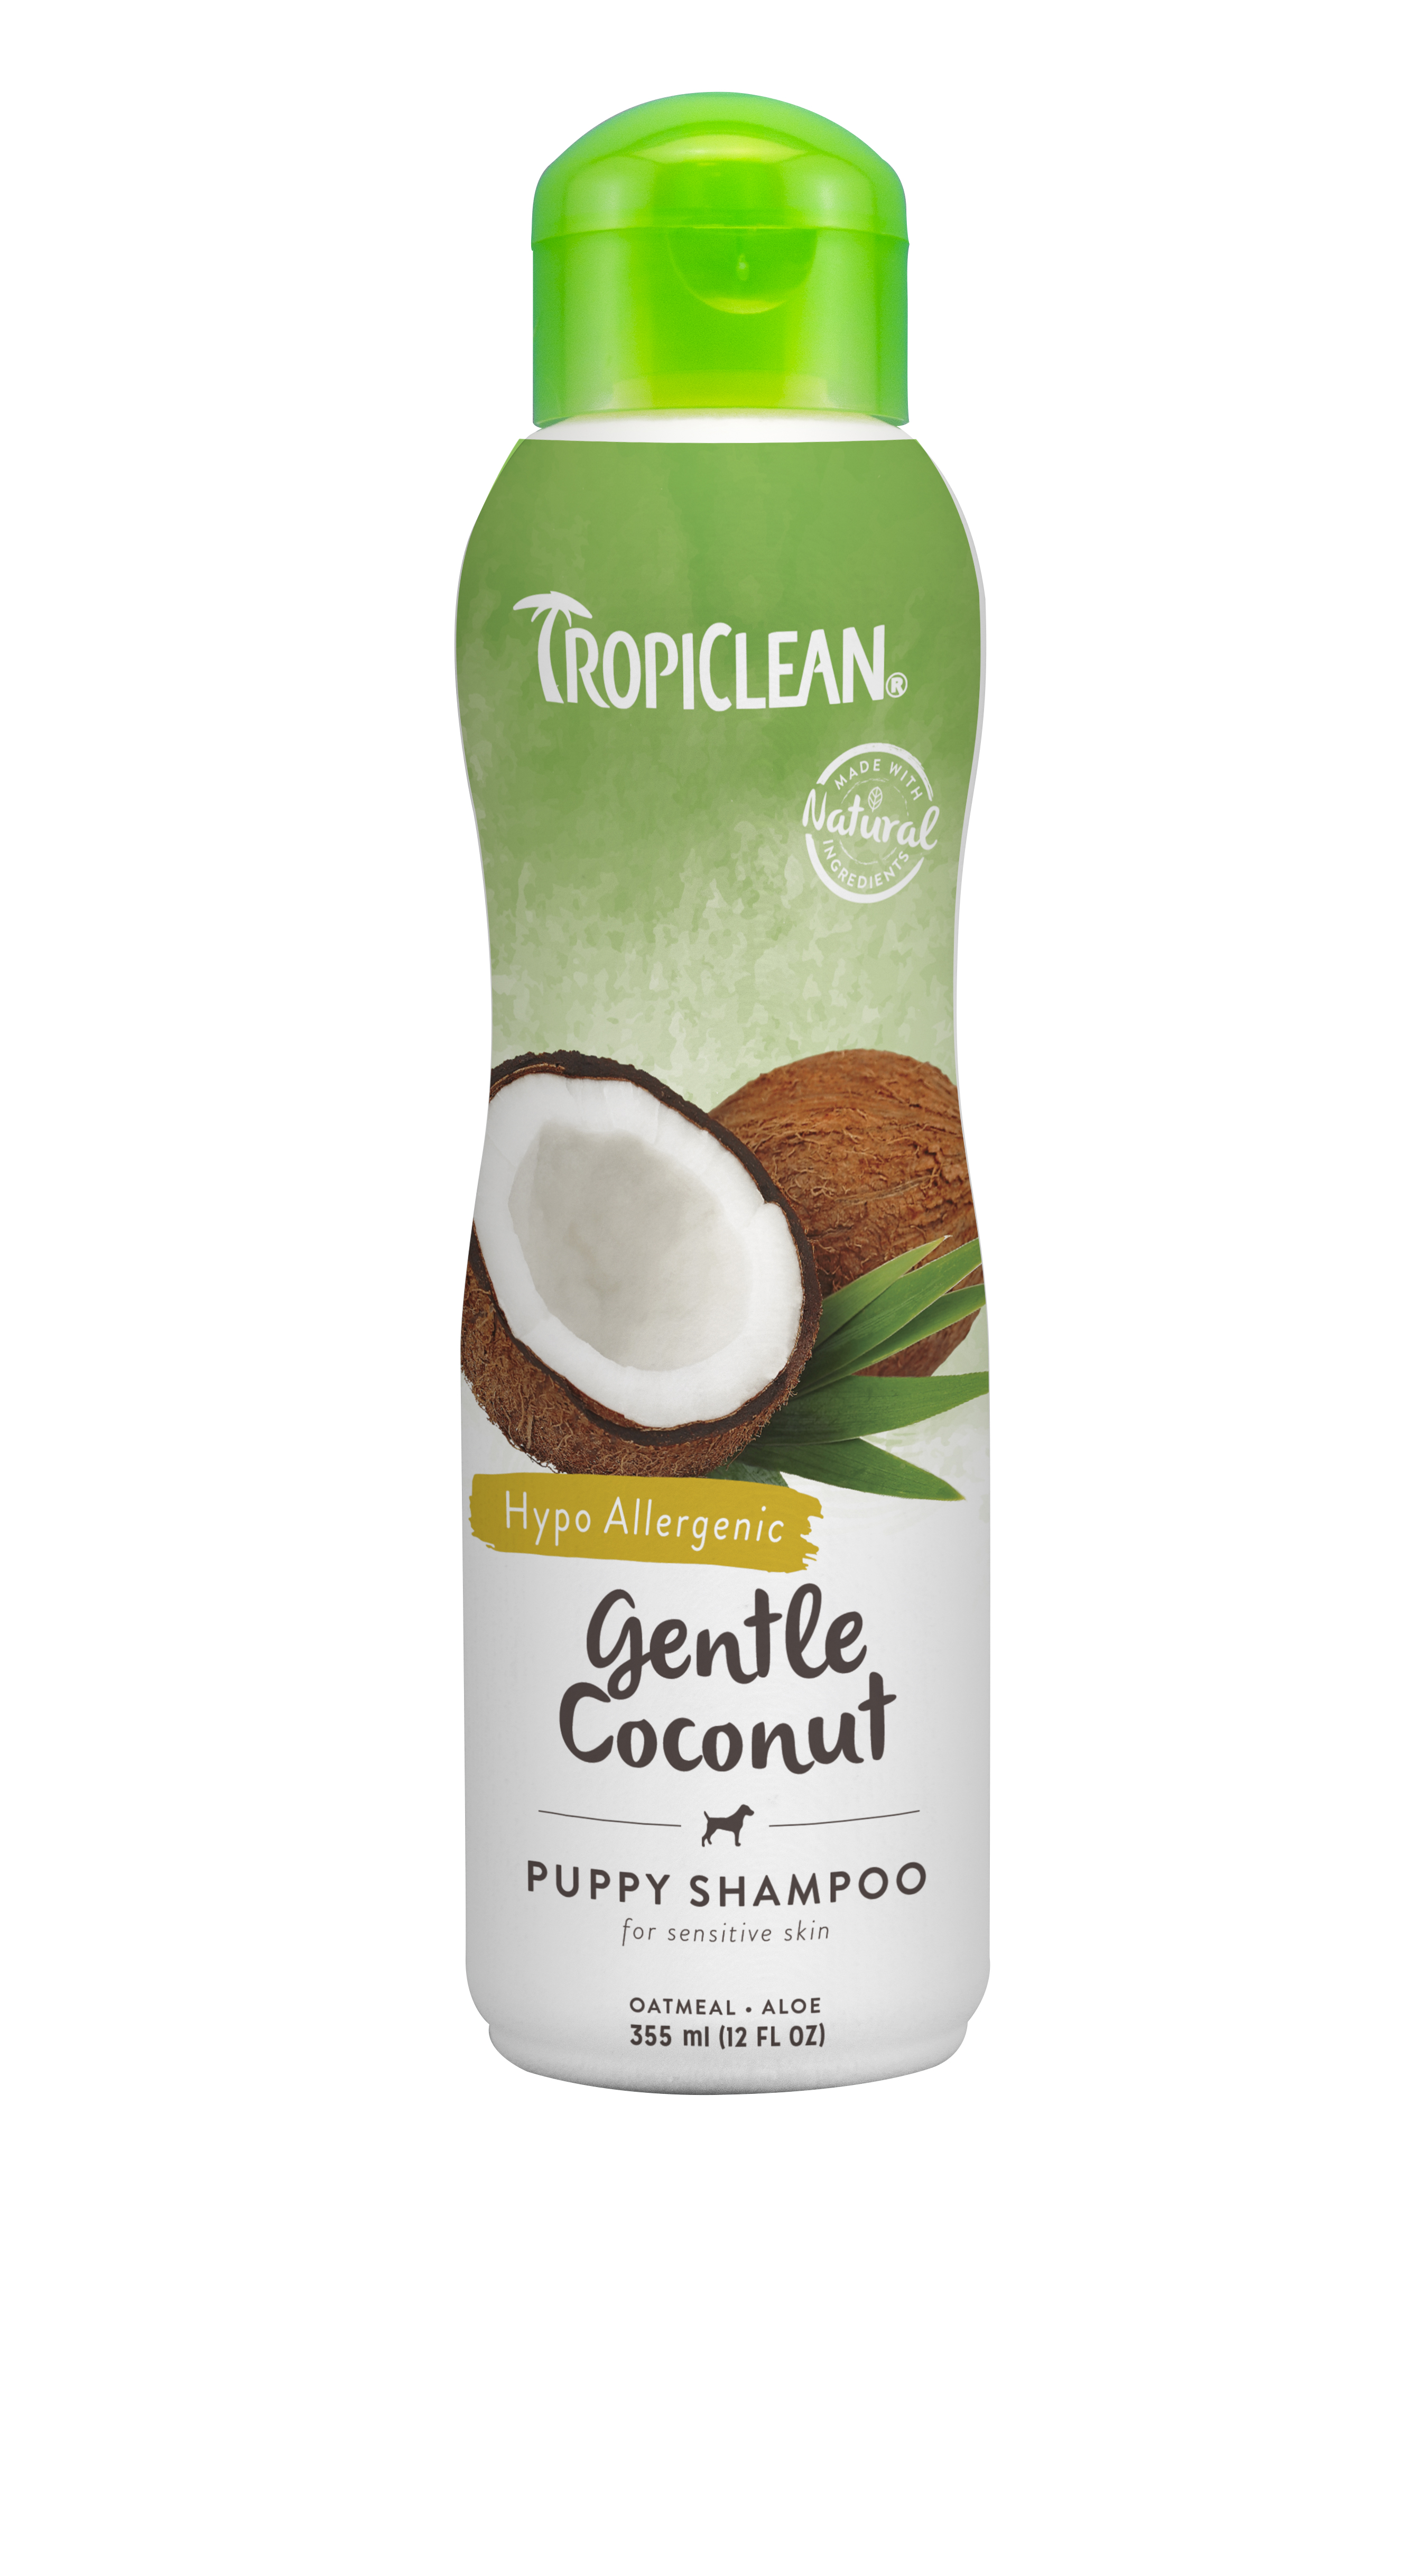 Tropiclean Gentle Coconut Puppy Shampoo (Hypoallergenic)